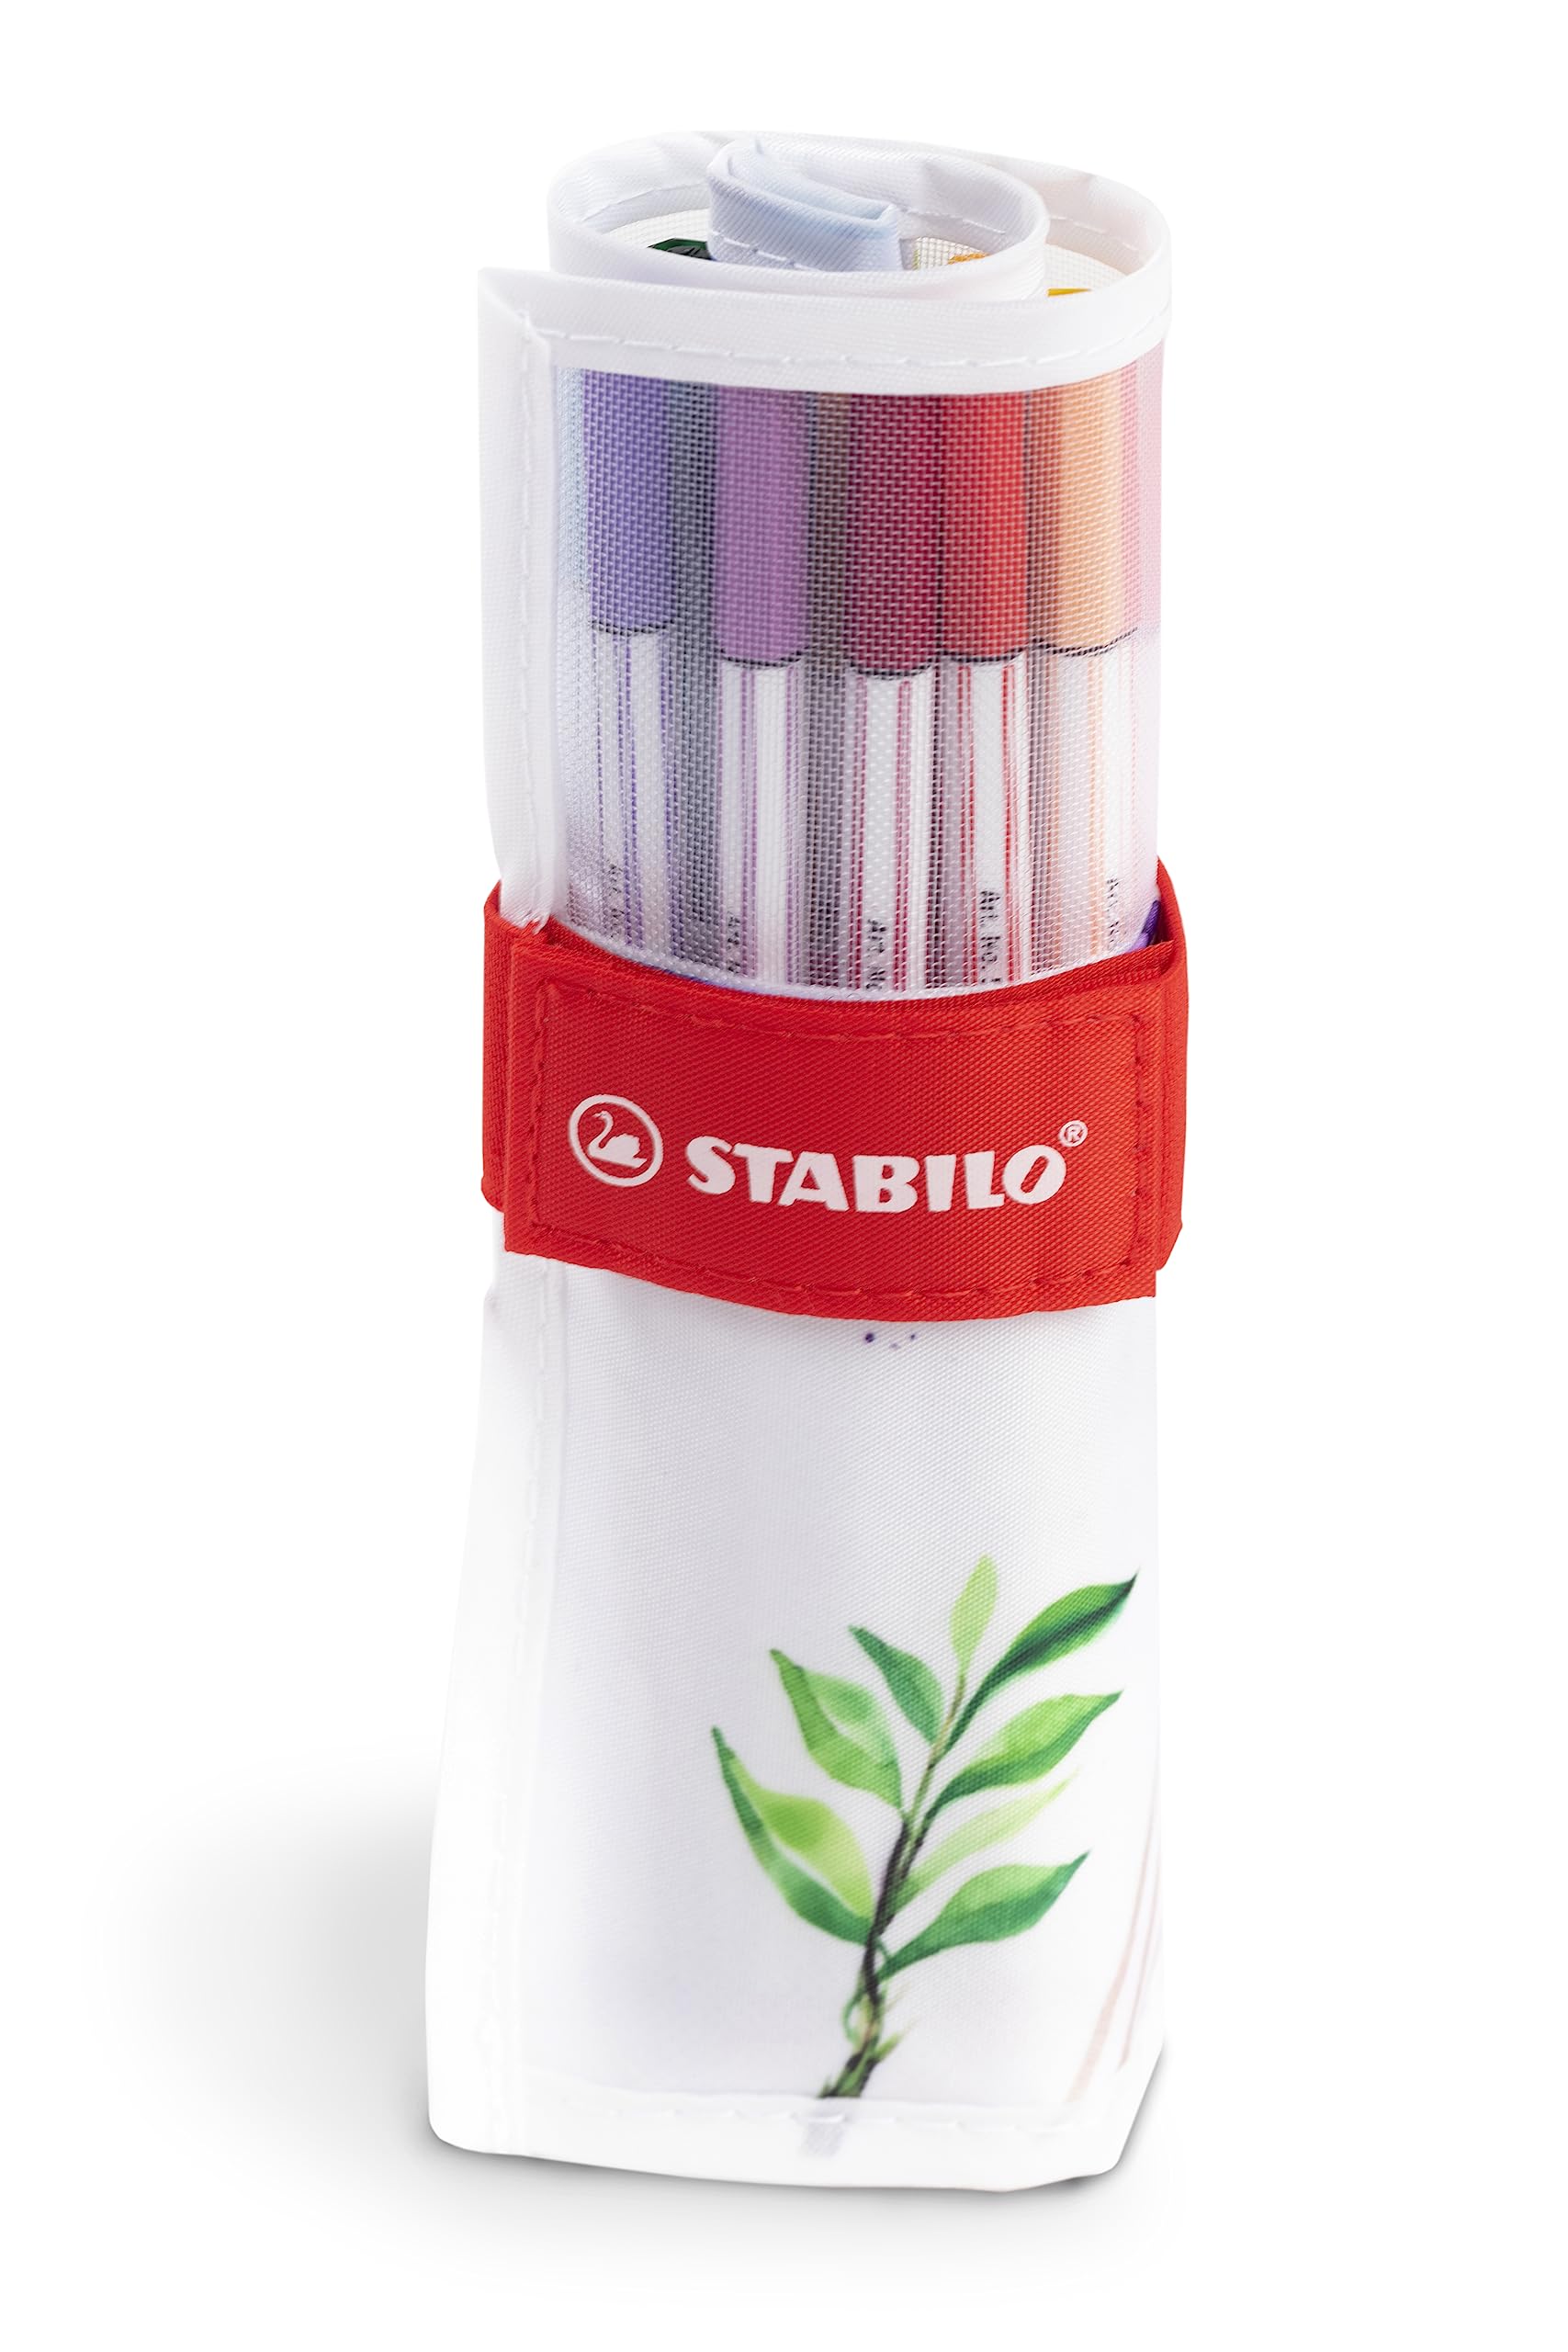 Stabilo Pen 68 brush arty Line rollerset da 18 colori ass.